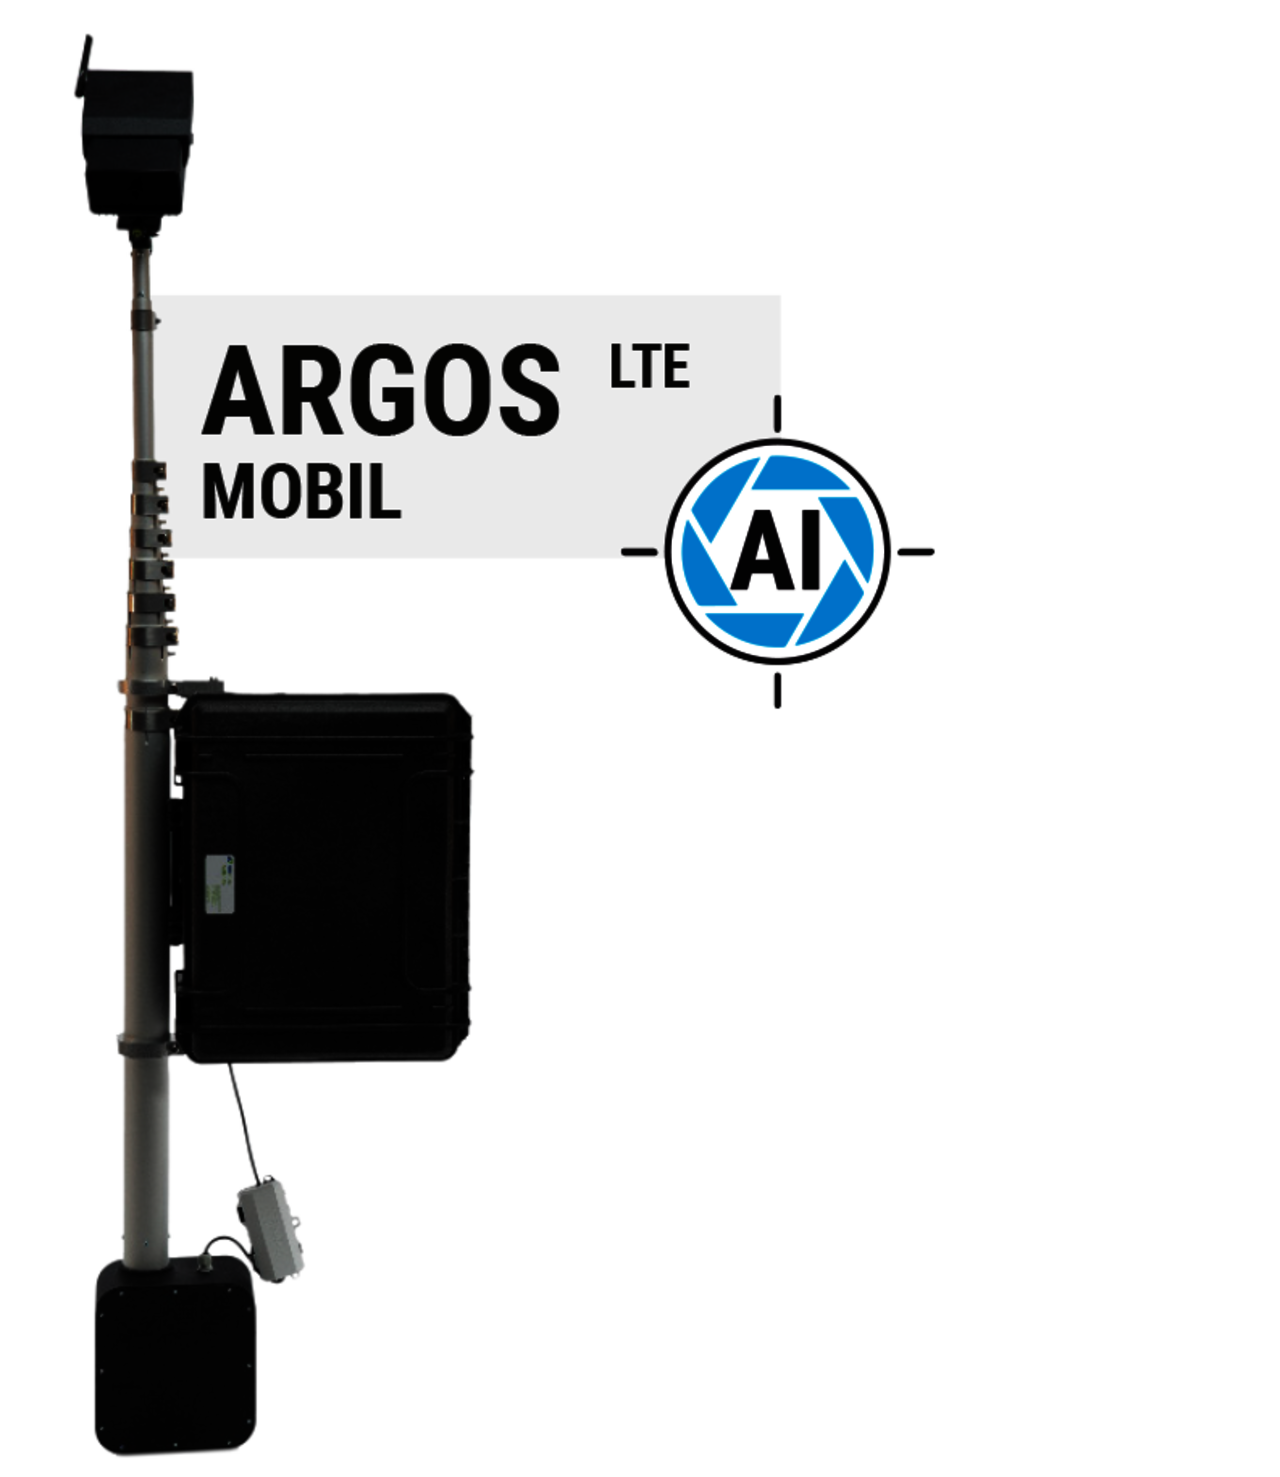 ARGOS mobile LTE - artificial intelligence